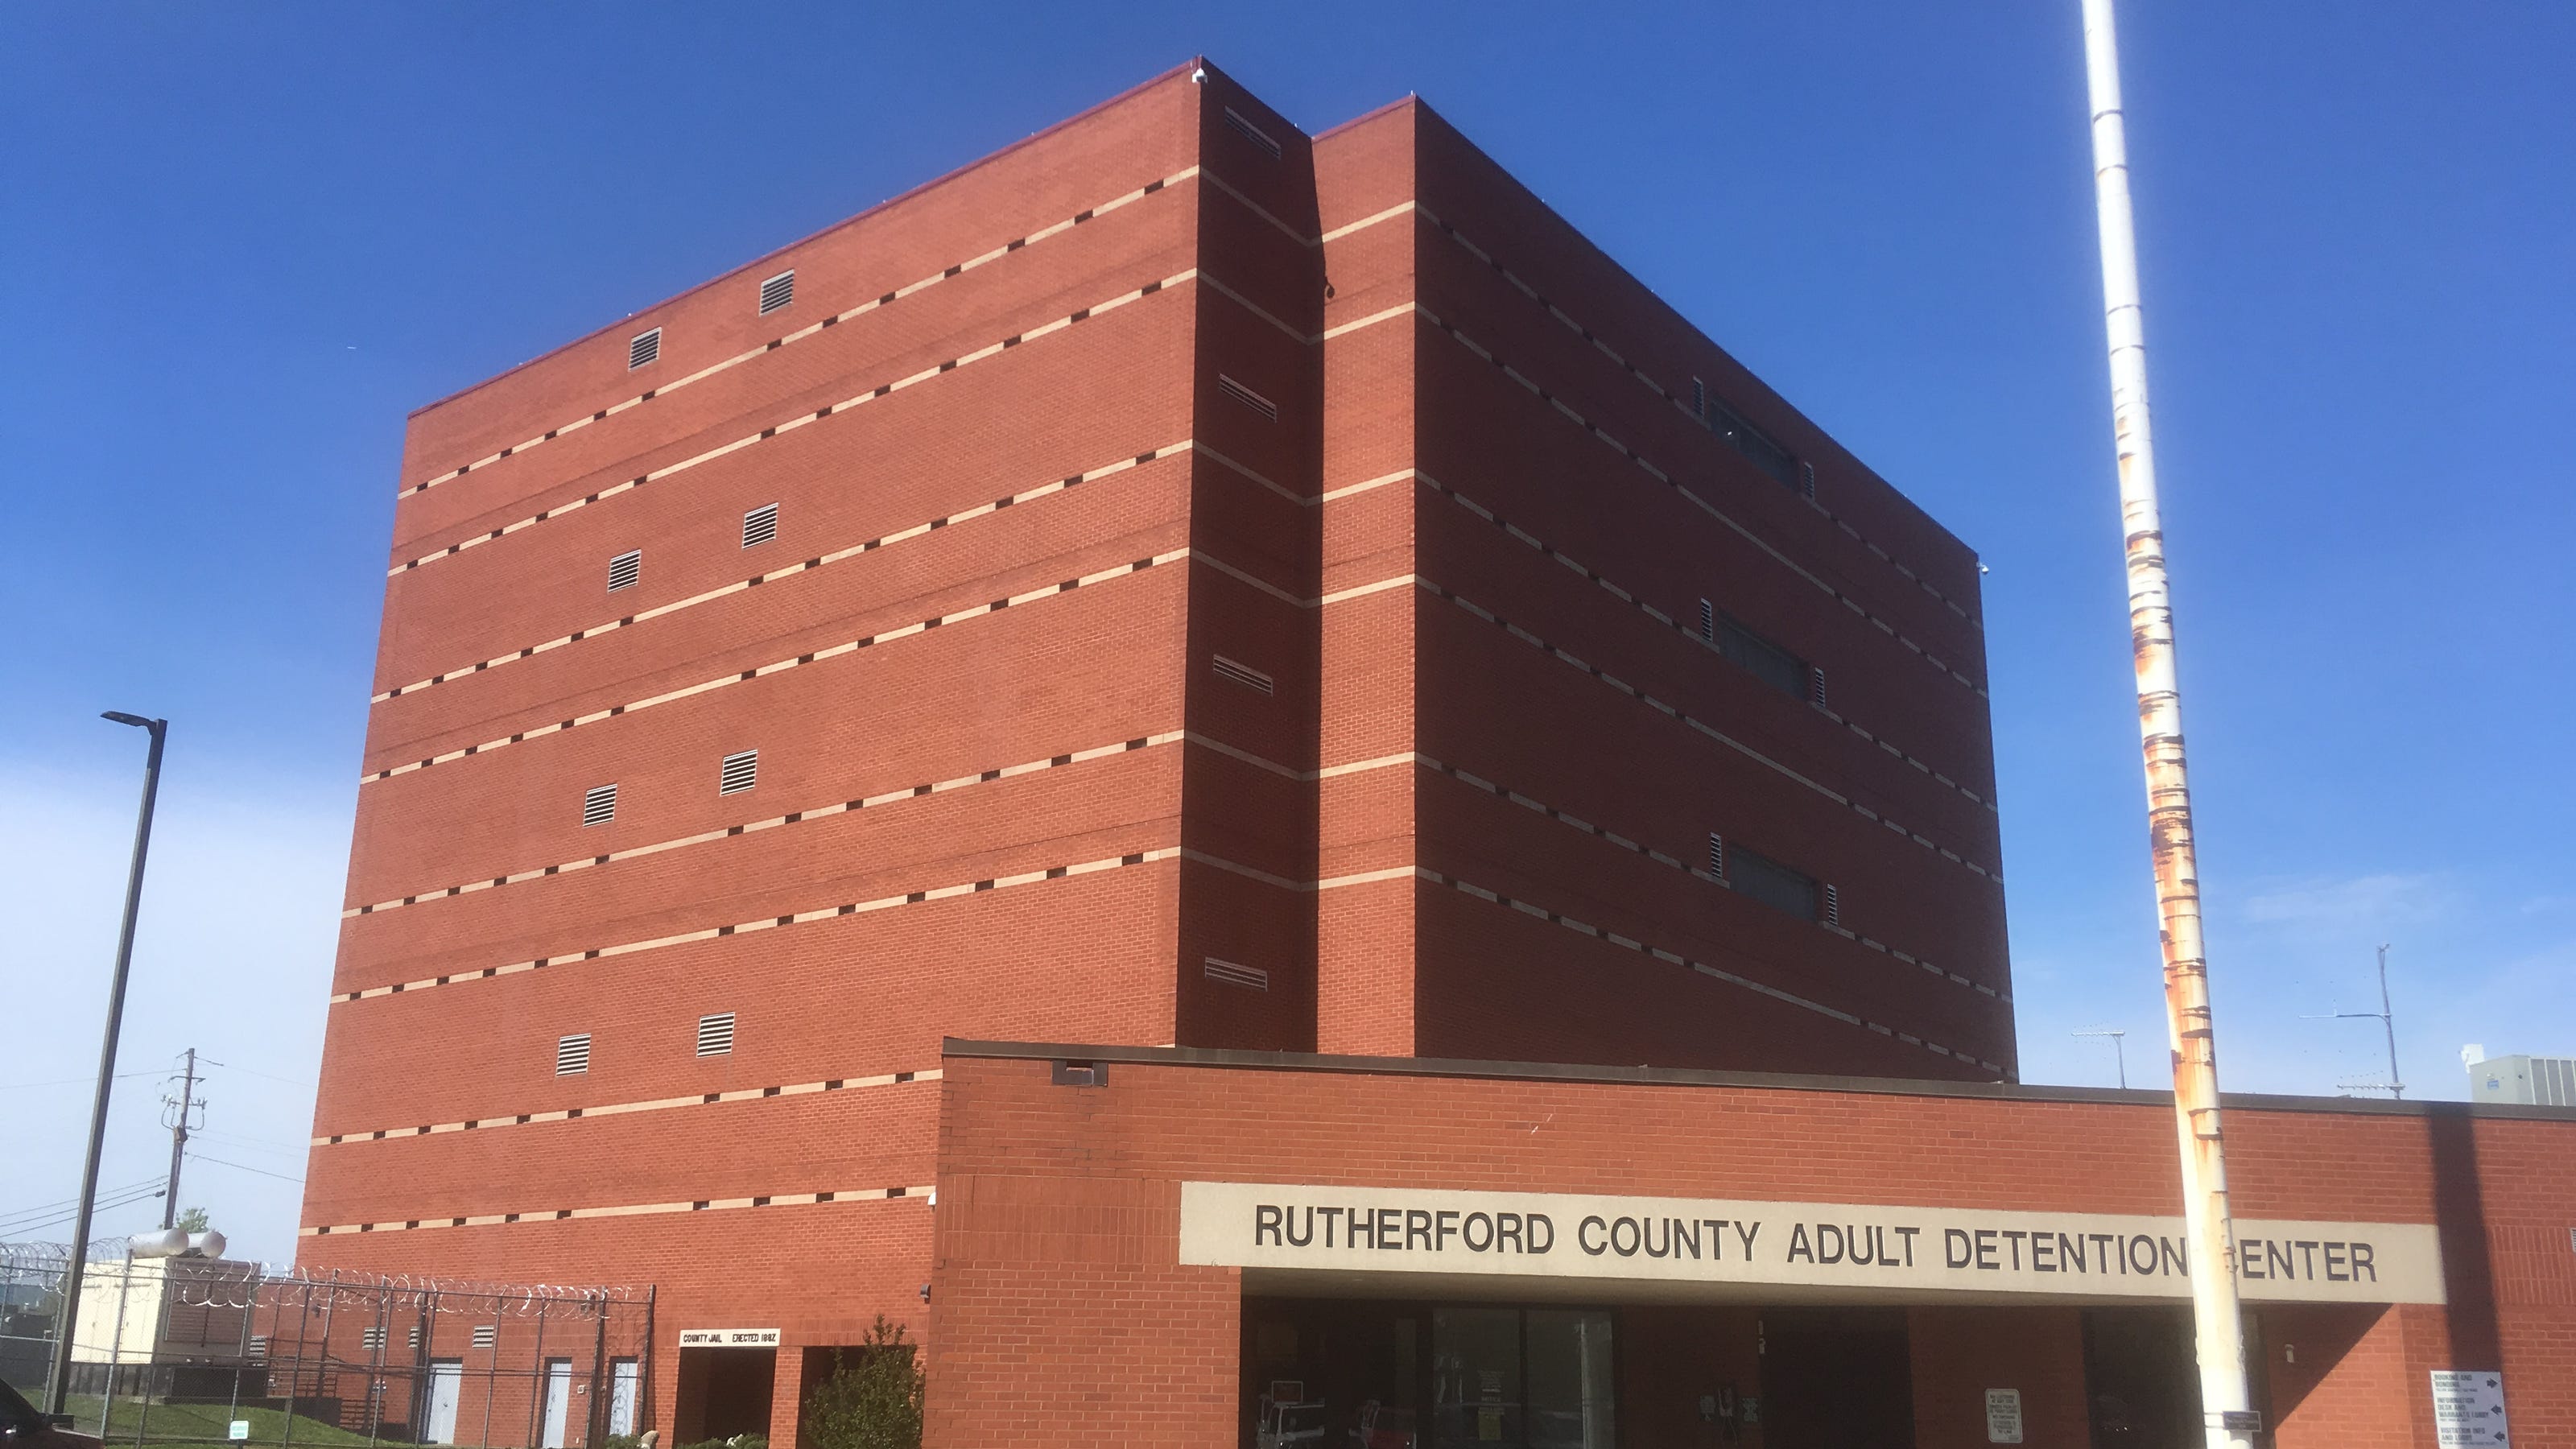 bail-bondsmen-doubtful-rutherford-county-pretrial-release-plan-will-work